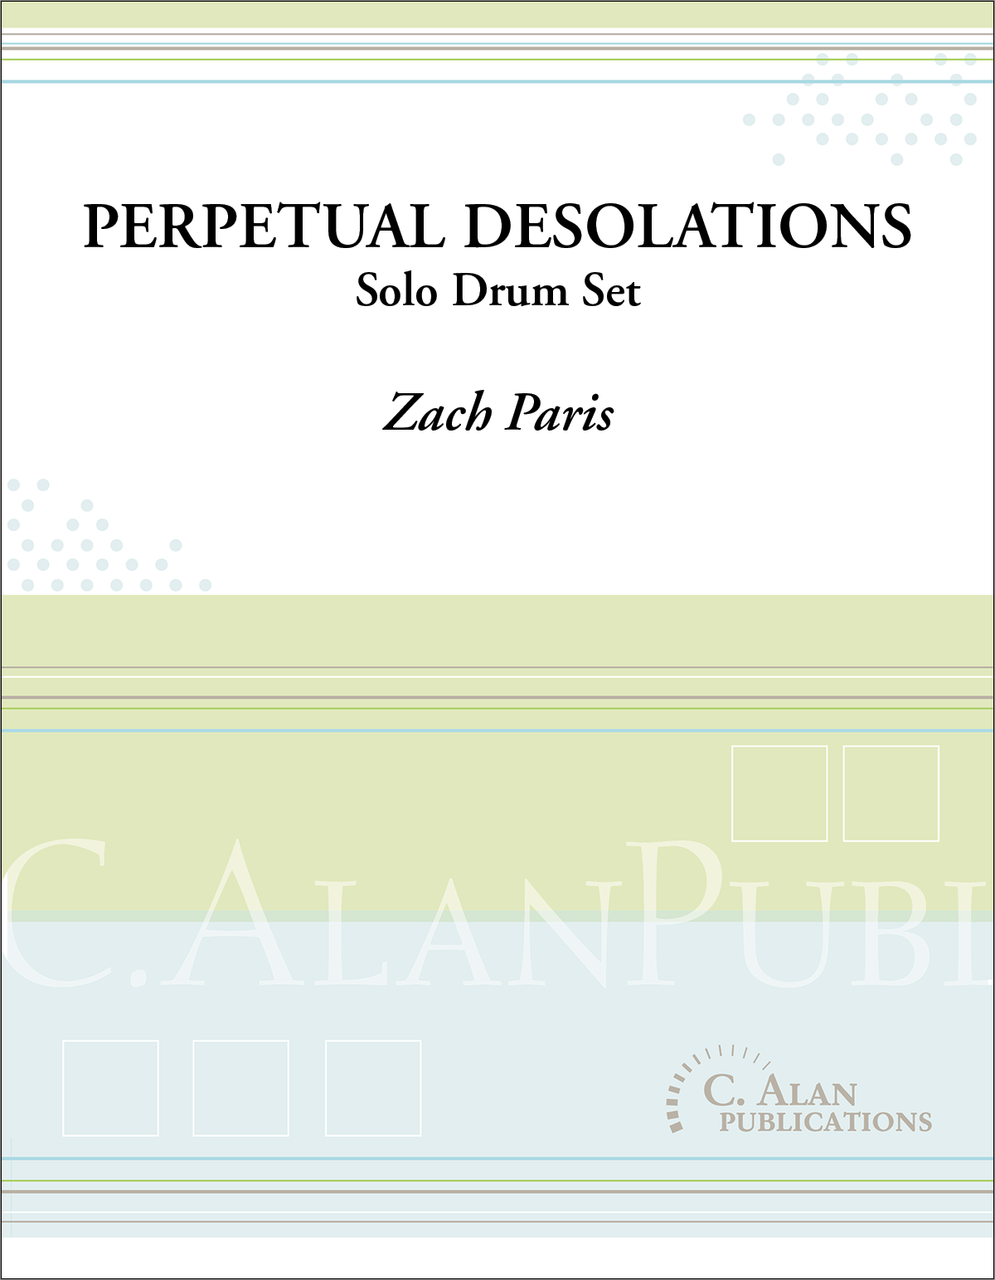 Perpetual Desolations by Zach Paris